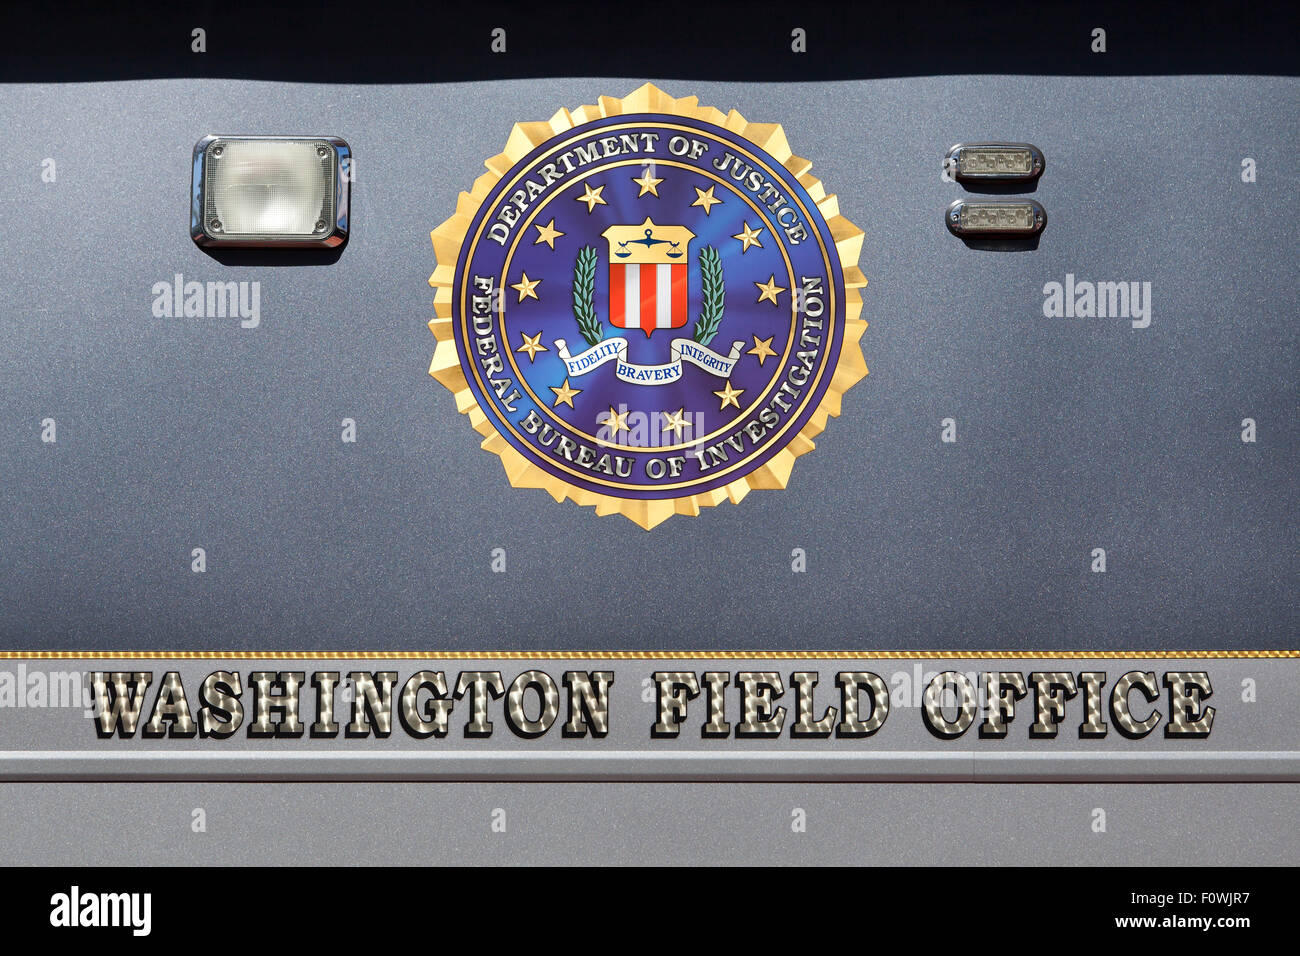 FBI Washington Field Office Central Command Véhicule - Washington, DC USA Banque D'Images